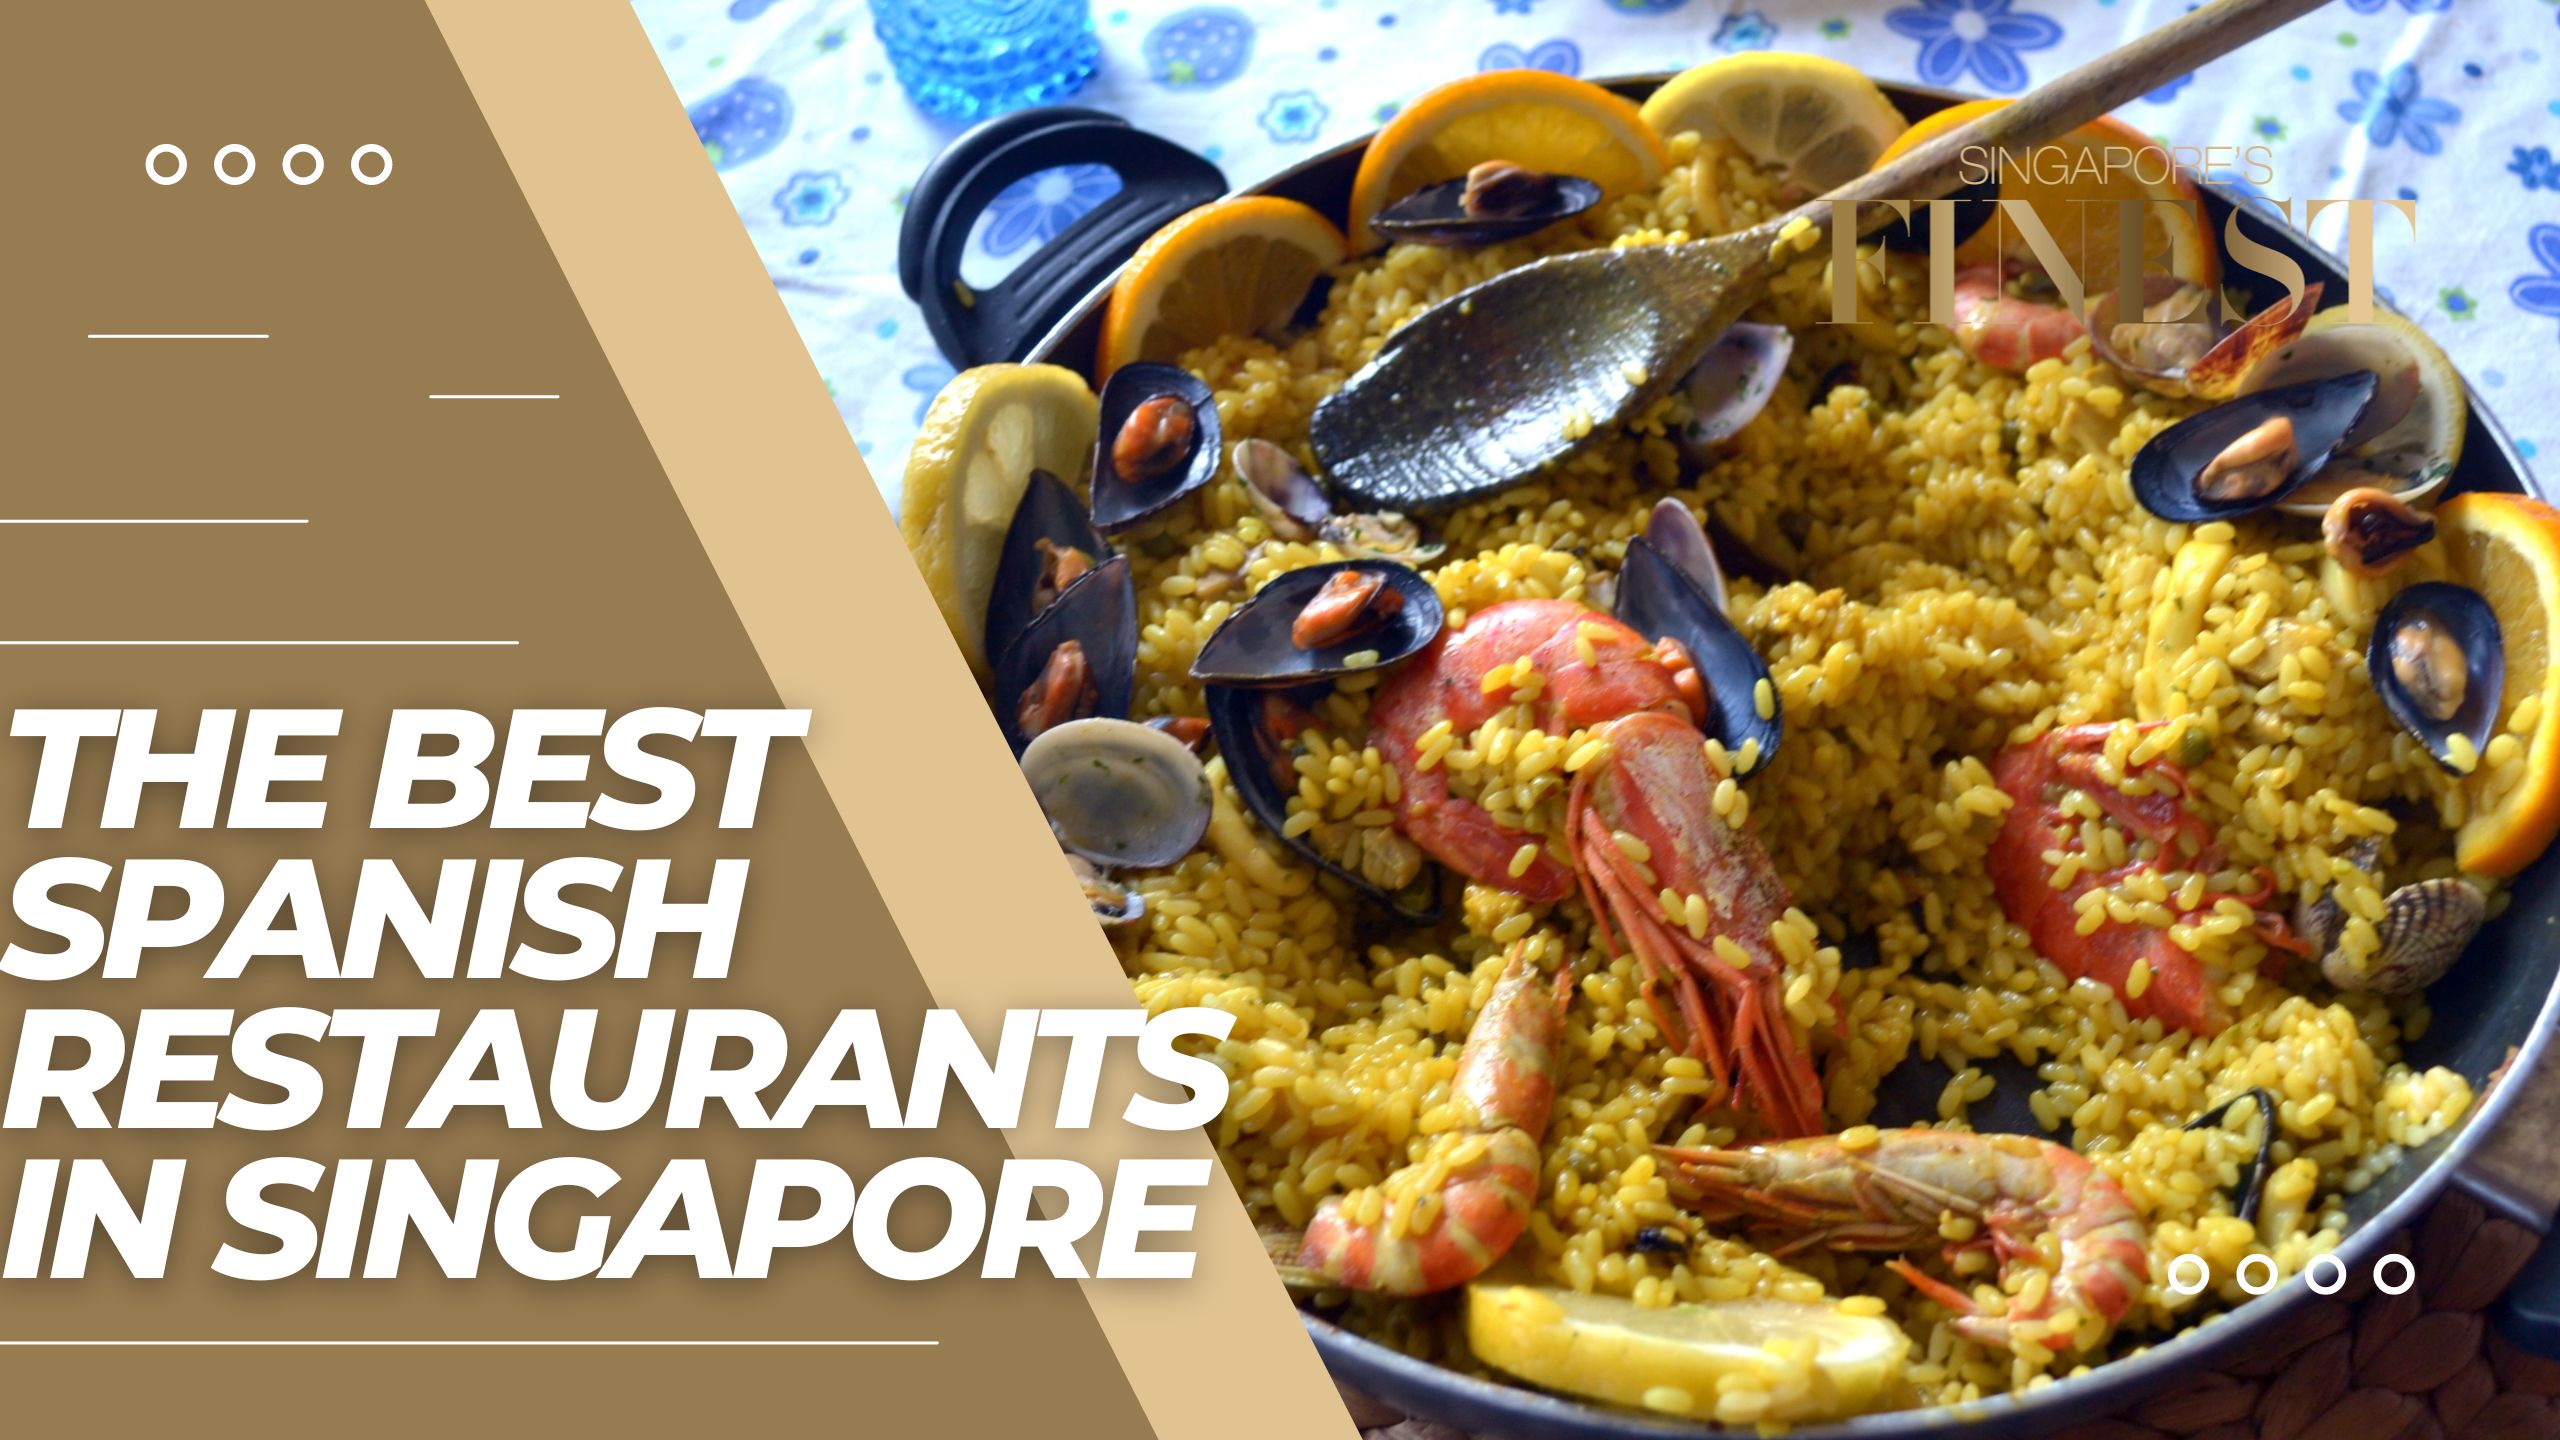 The Finest Spanish Restaurants in Singapore